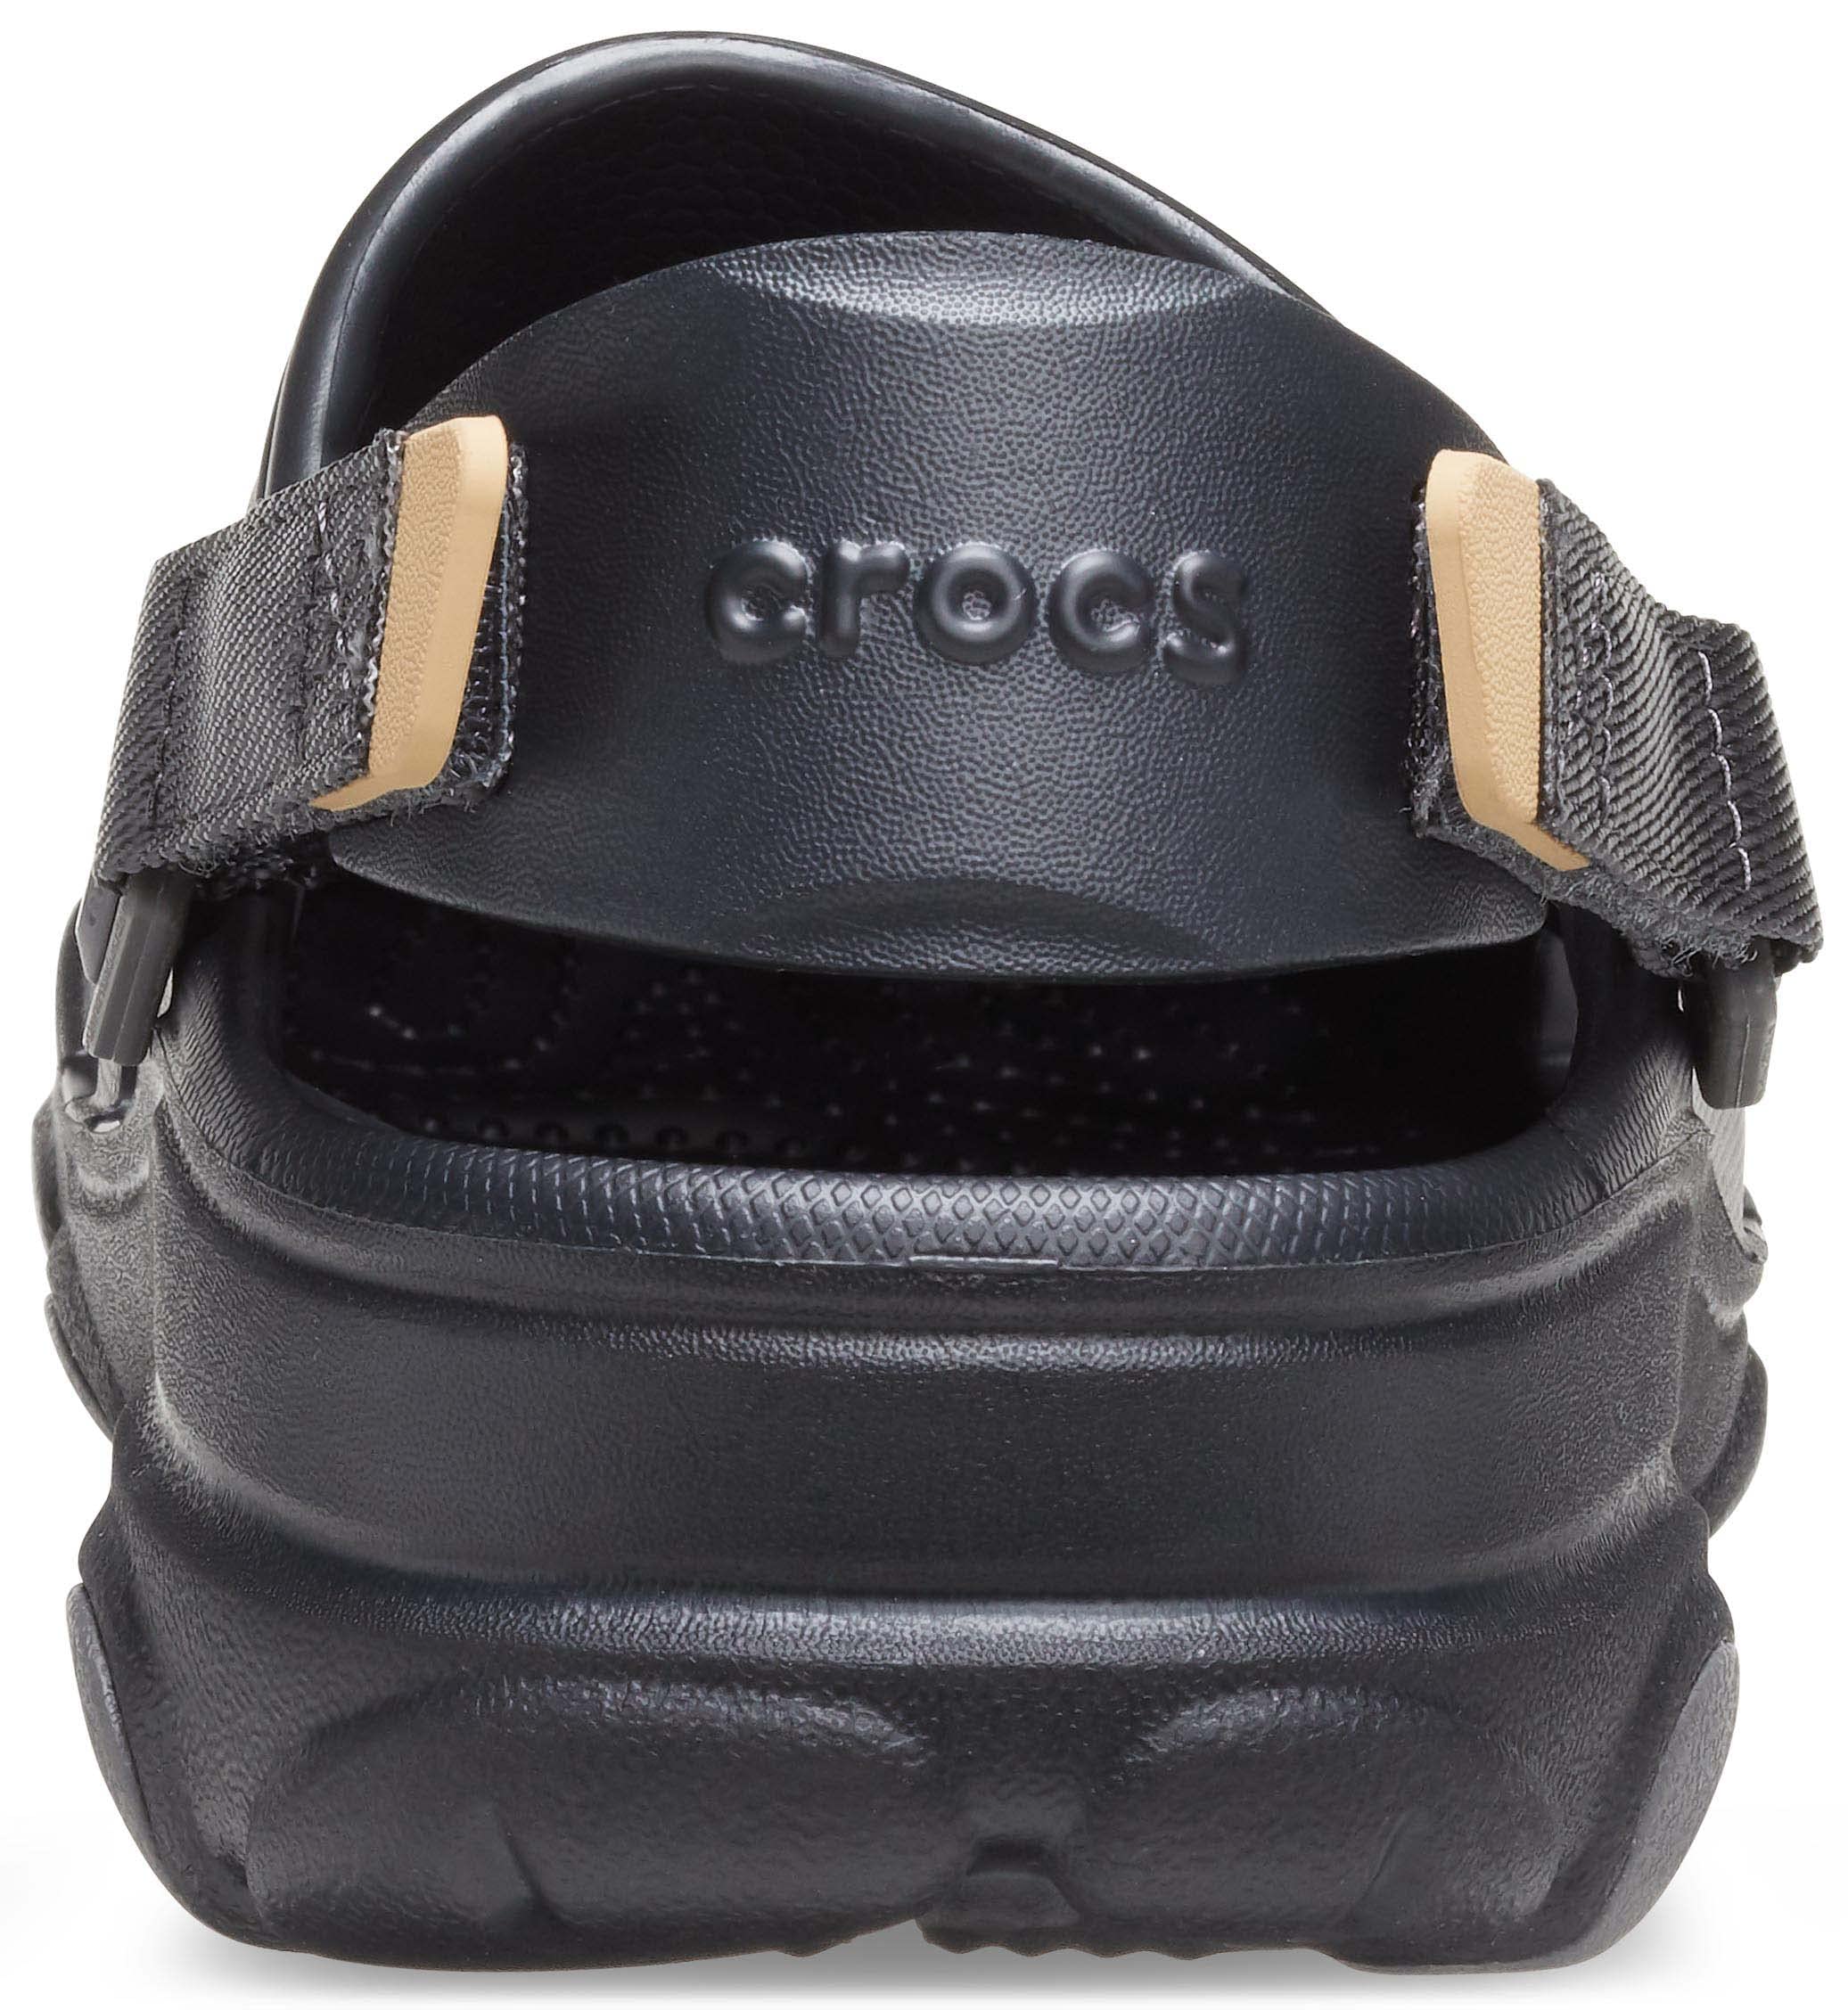 Crocs Unisex-Adult All Terrain Clogs with Adjustable Heel Strap